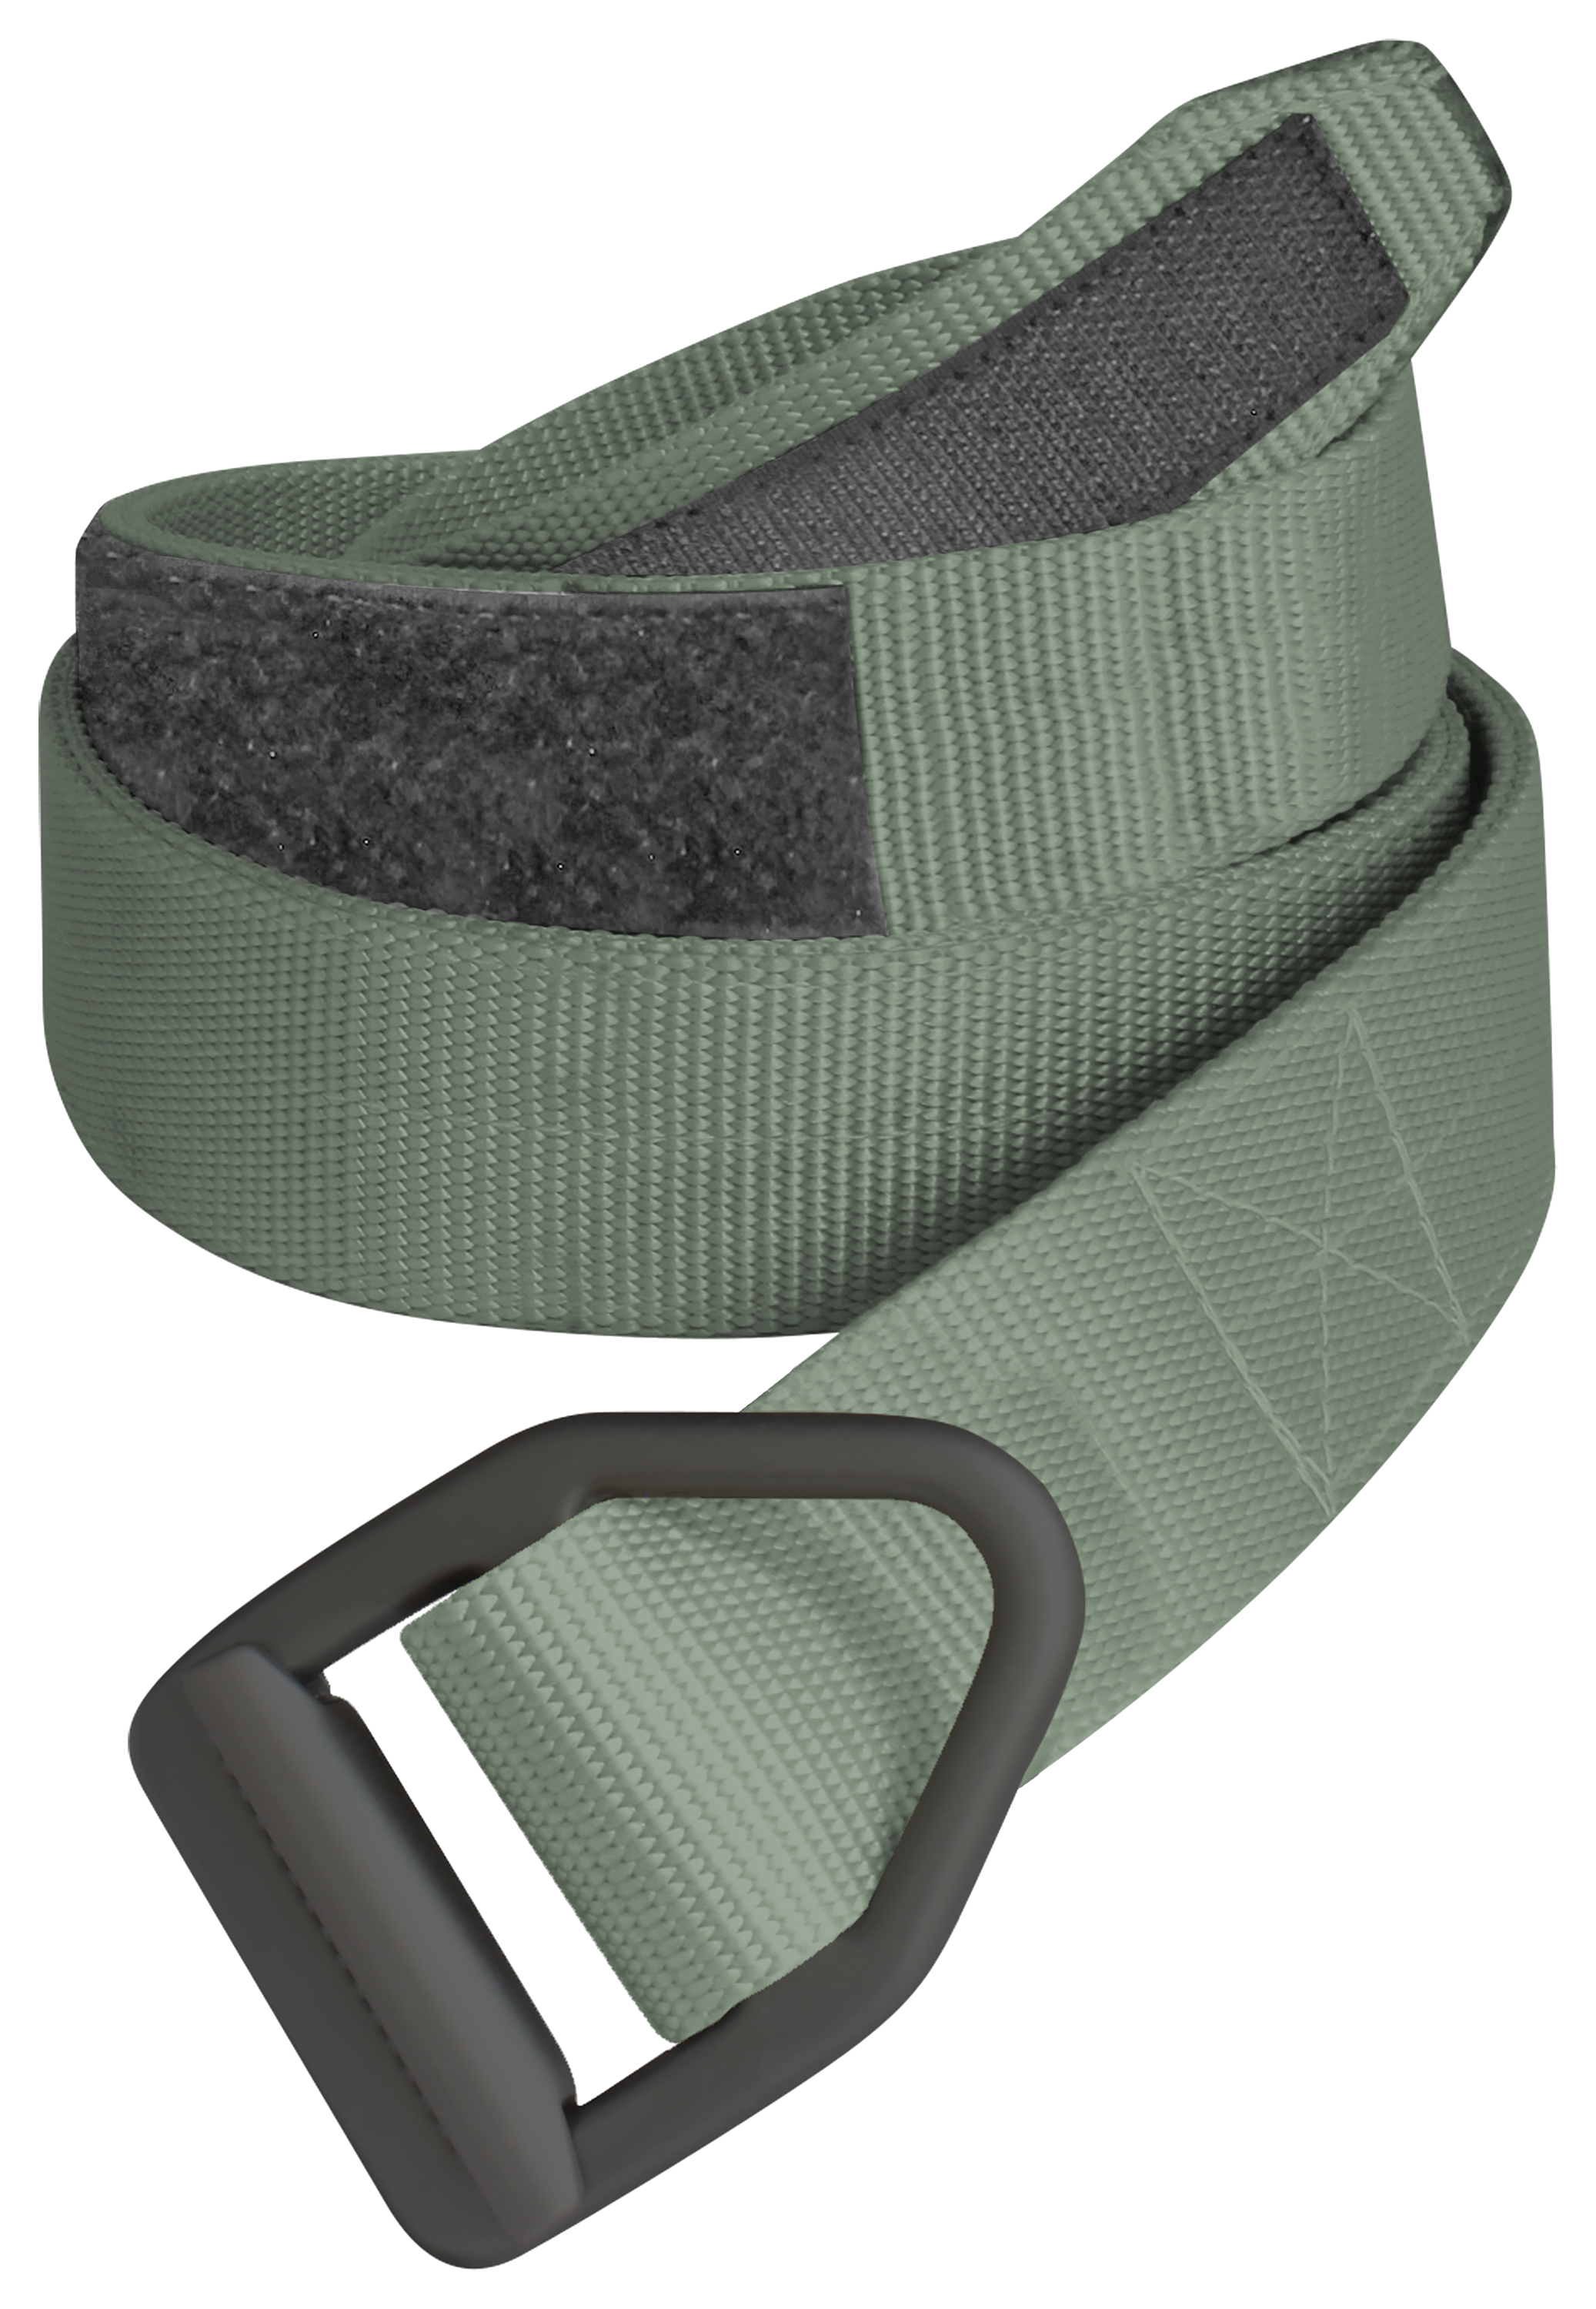 Bison Designs Last Chance Heavy-Duty Belt for Men - Olive - 2XL